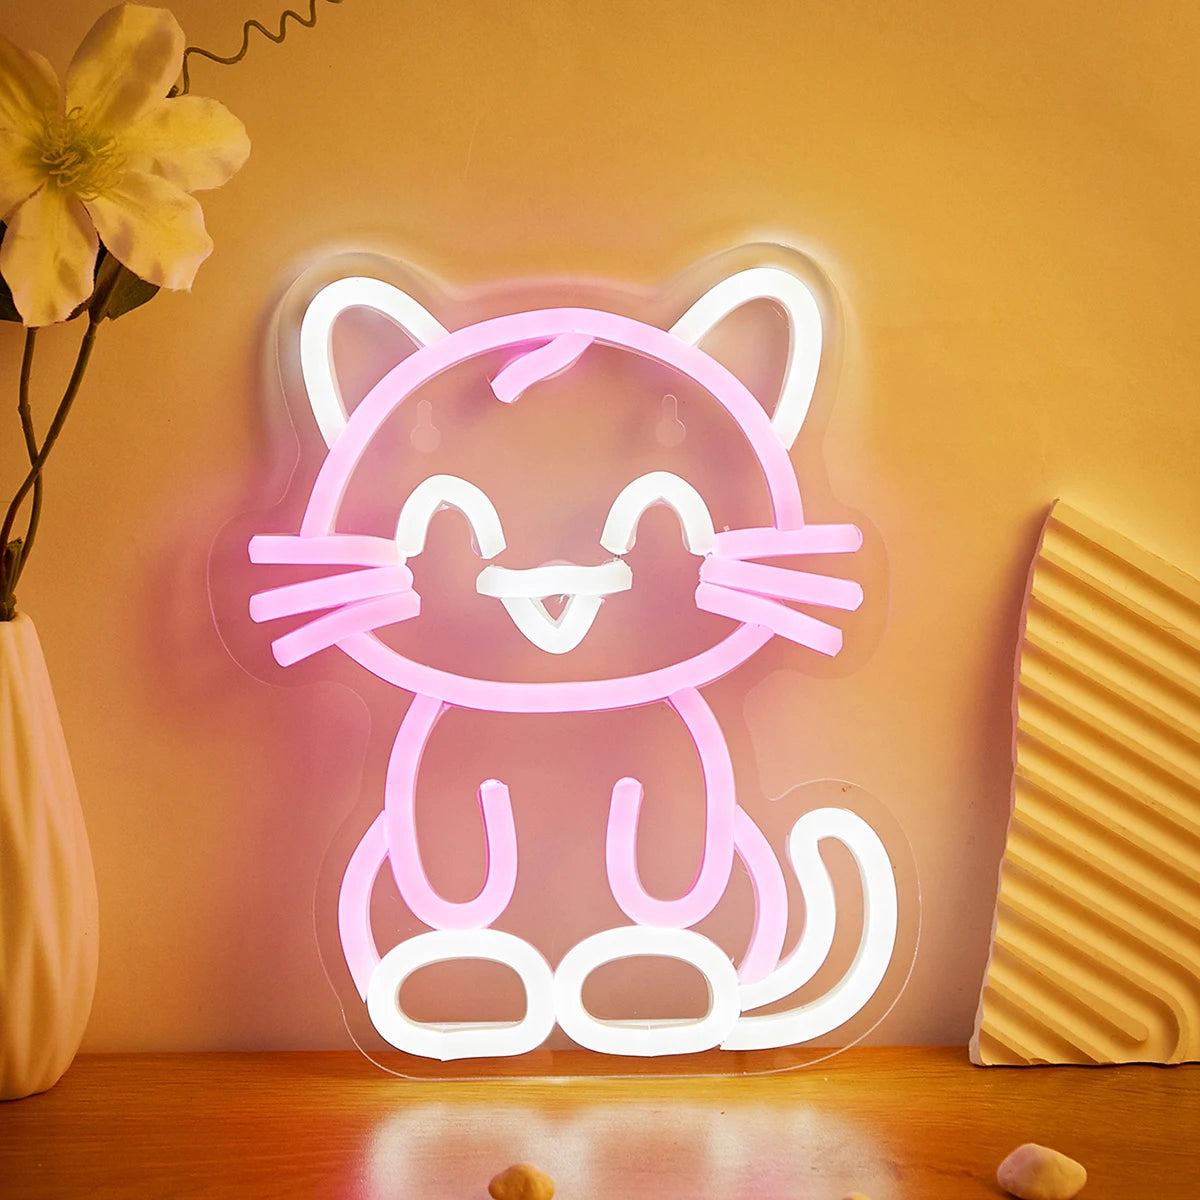 Cute Cat Neon Light